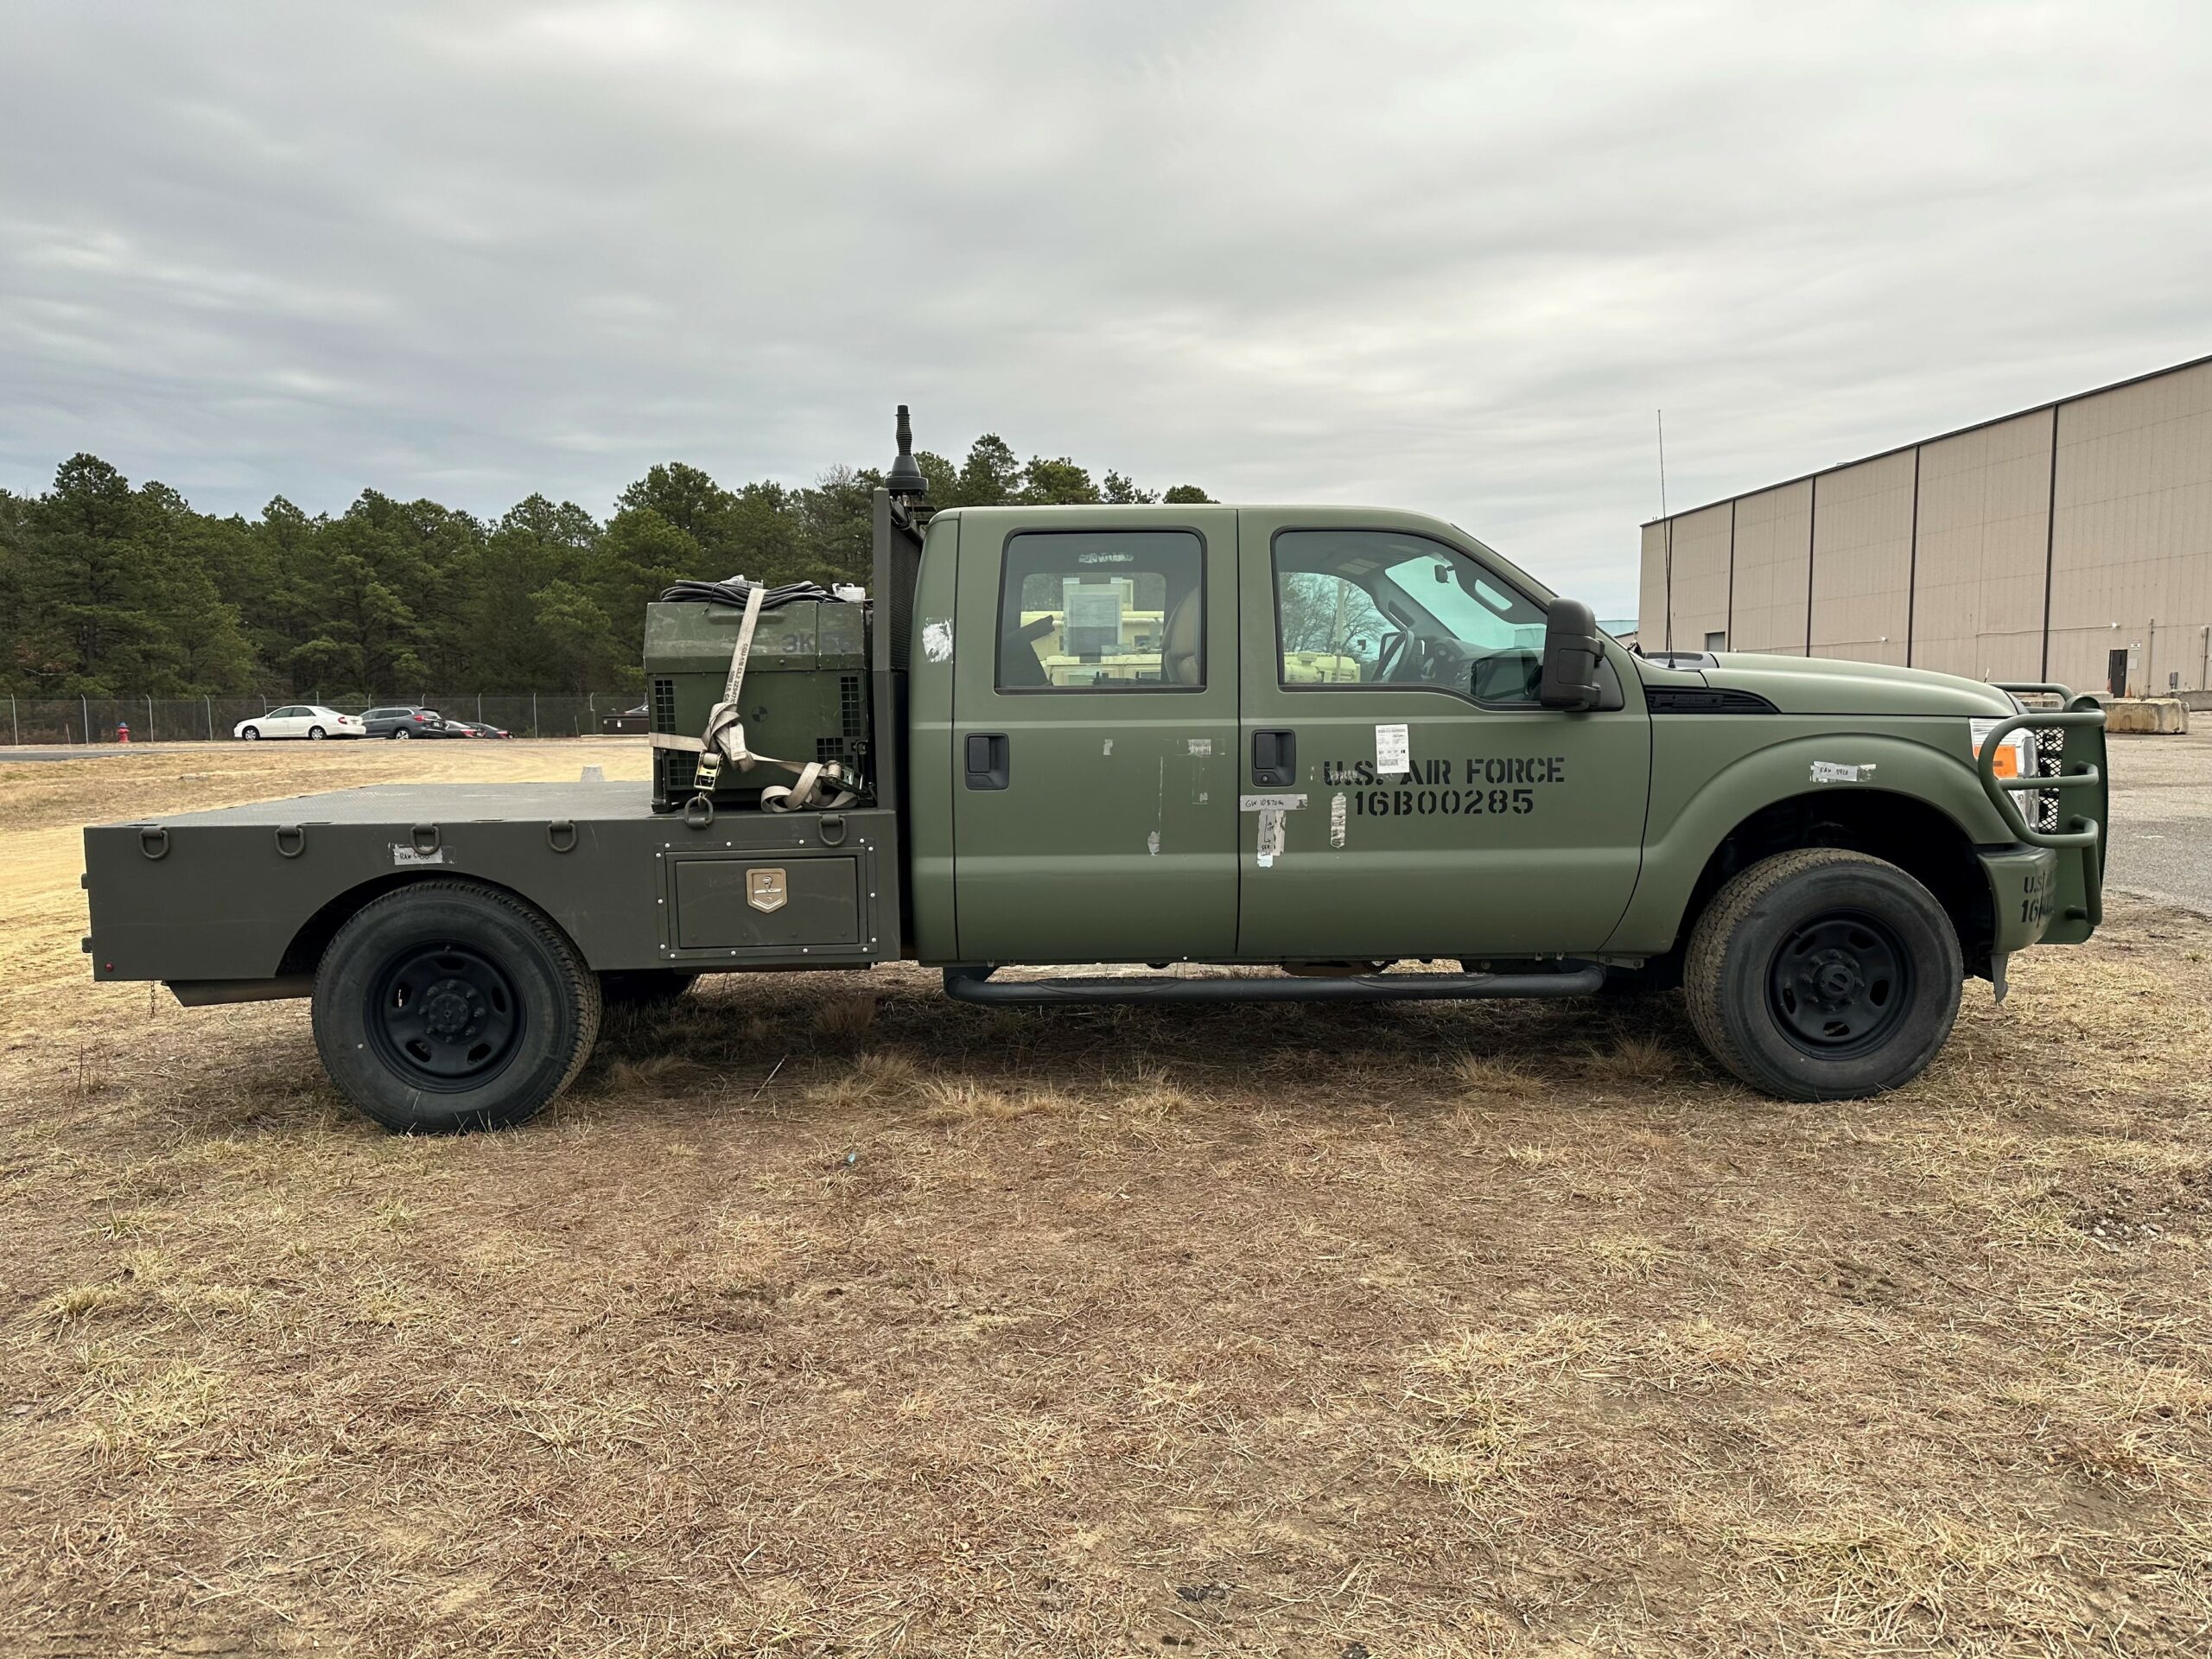 Retrofitted light service support vehicle. Photo: Tech. Sgt. Anastasia Tompkins/USAF